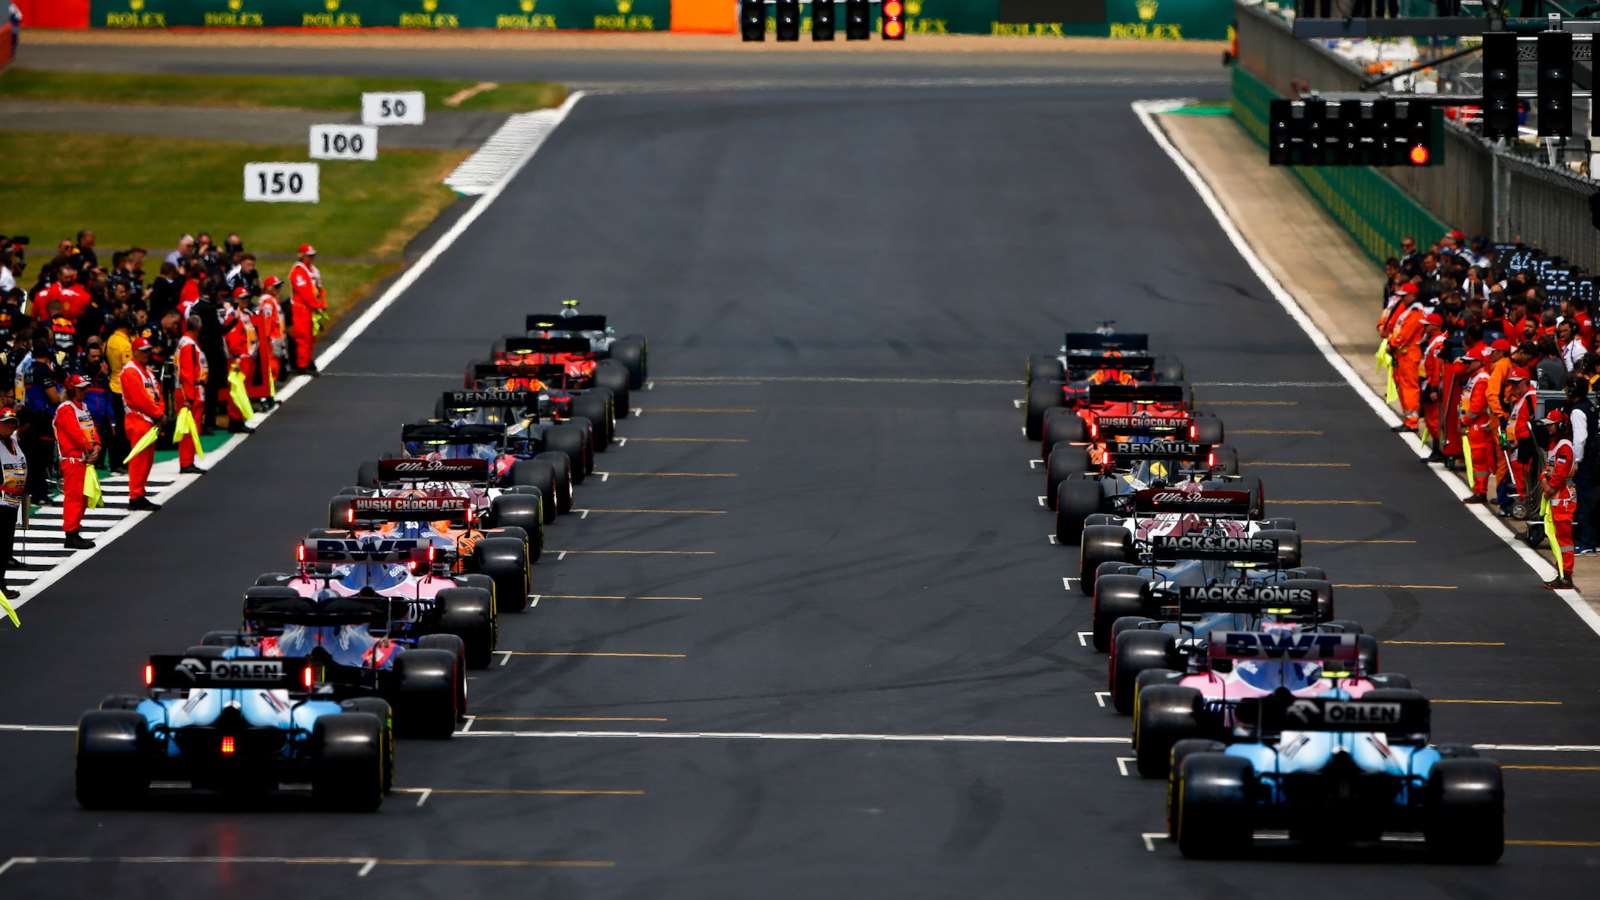 F1 Race Tracks Wallpapers 4k, HD F1 Race Tracks Backgrounds on